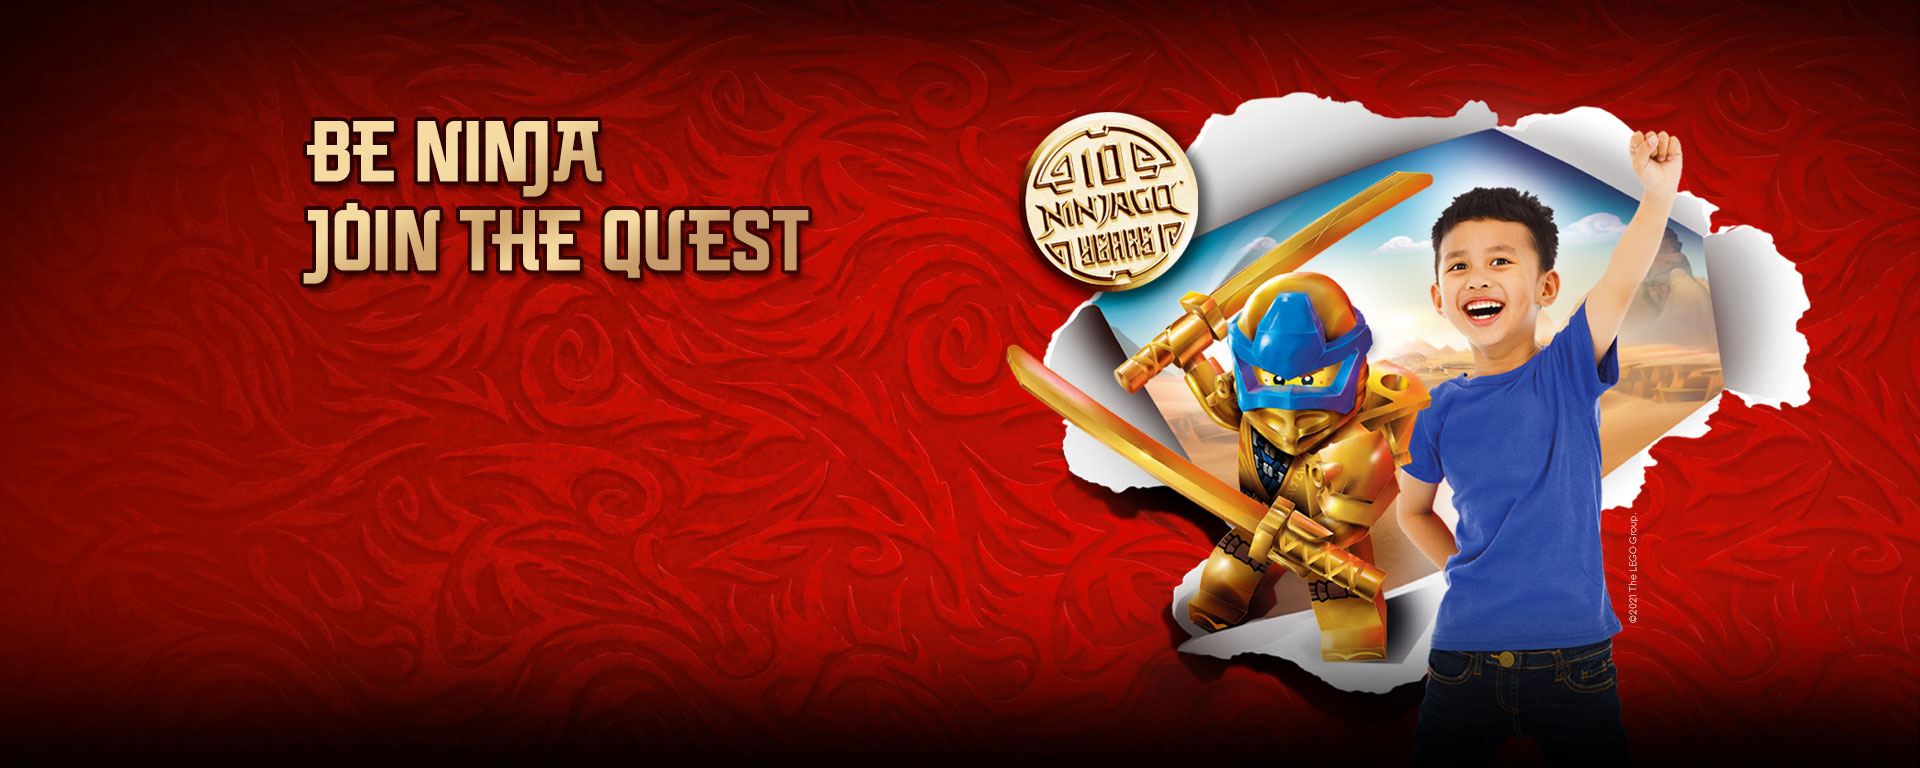 Be Ninja, Join the Quest with LEGO NINJAGO